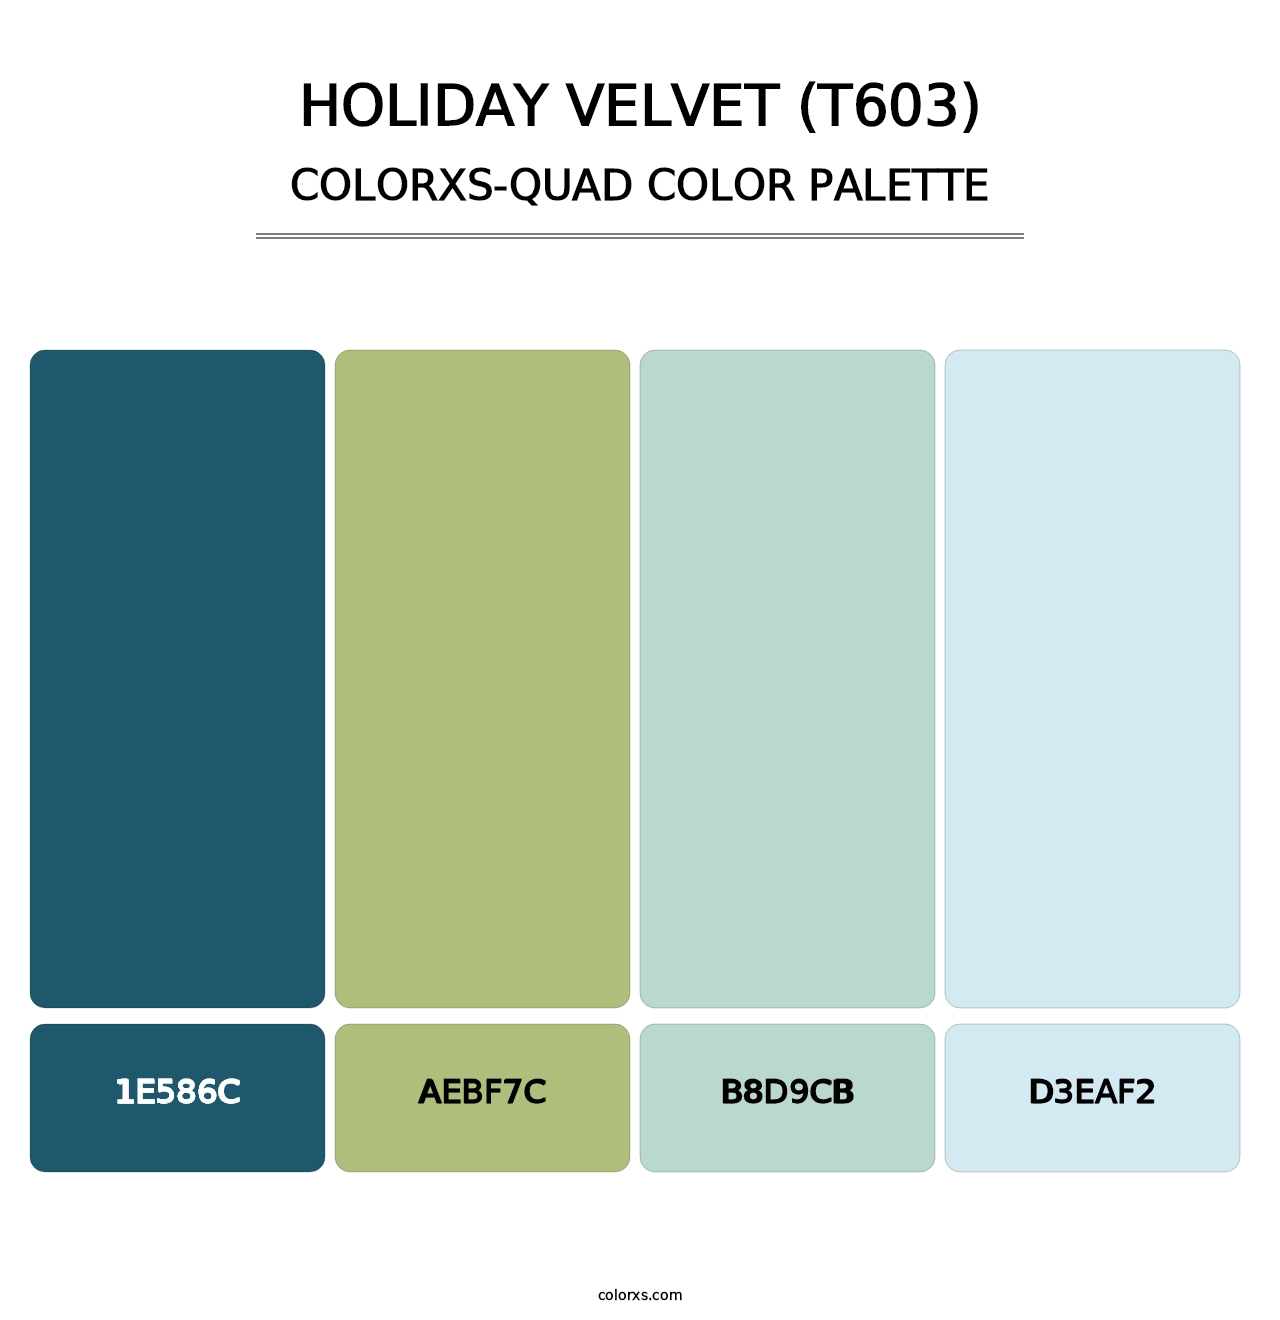 Holiday Velvet (T603) - Colorxs Quad Palette